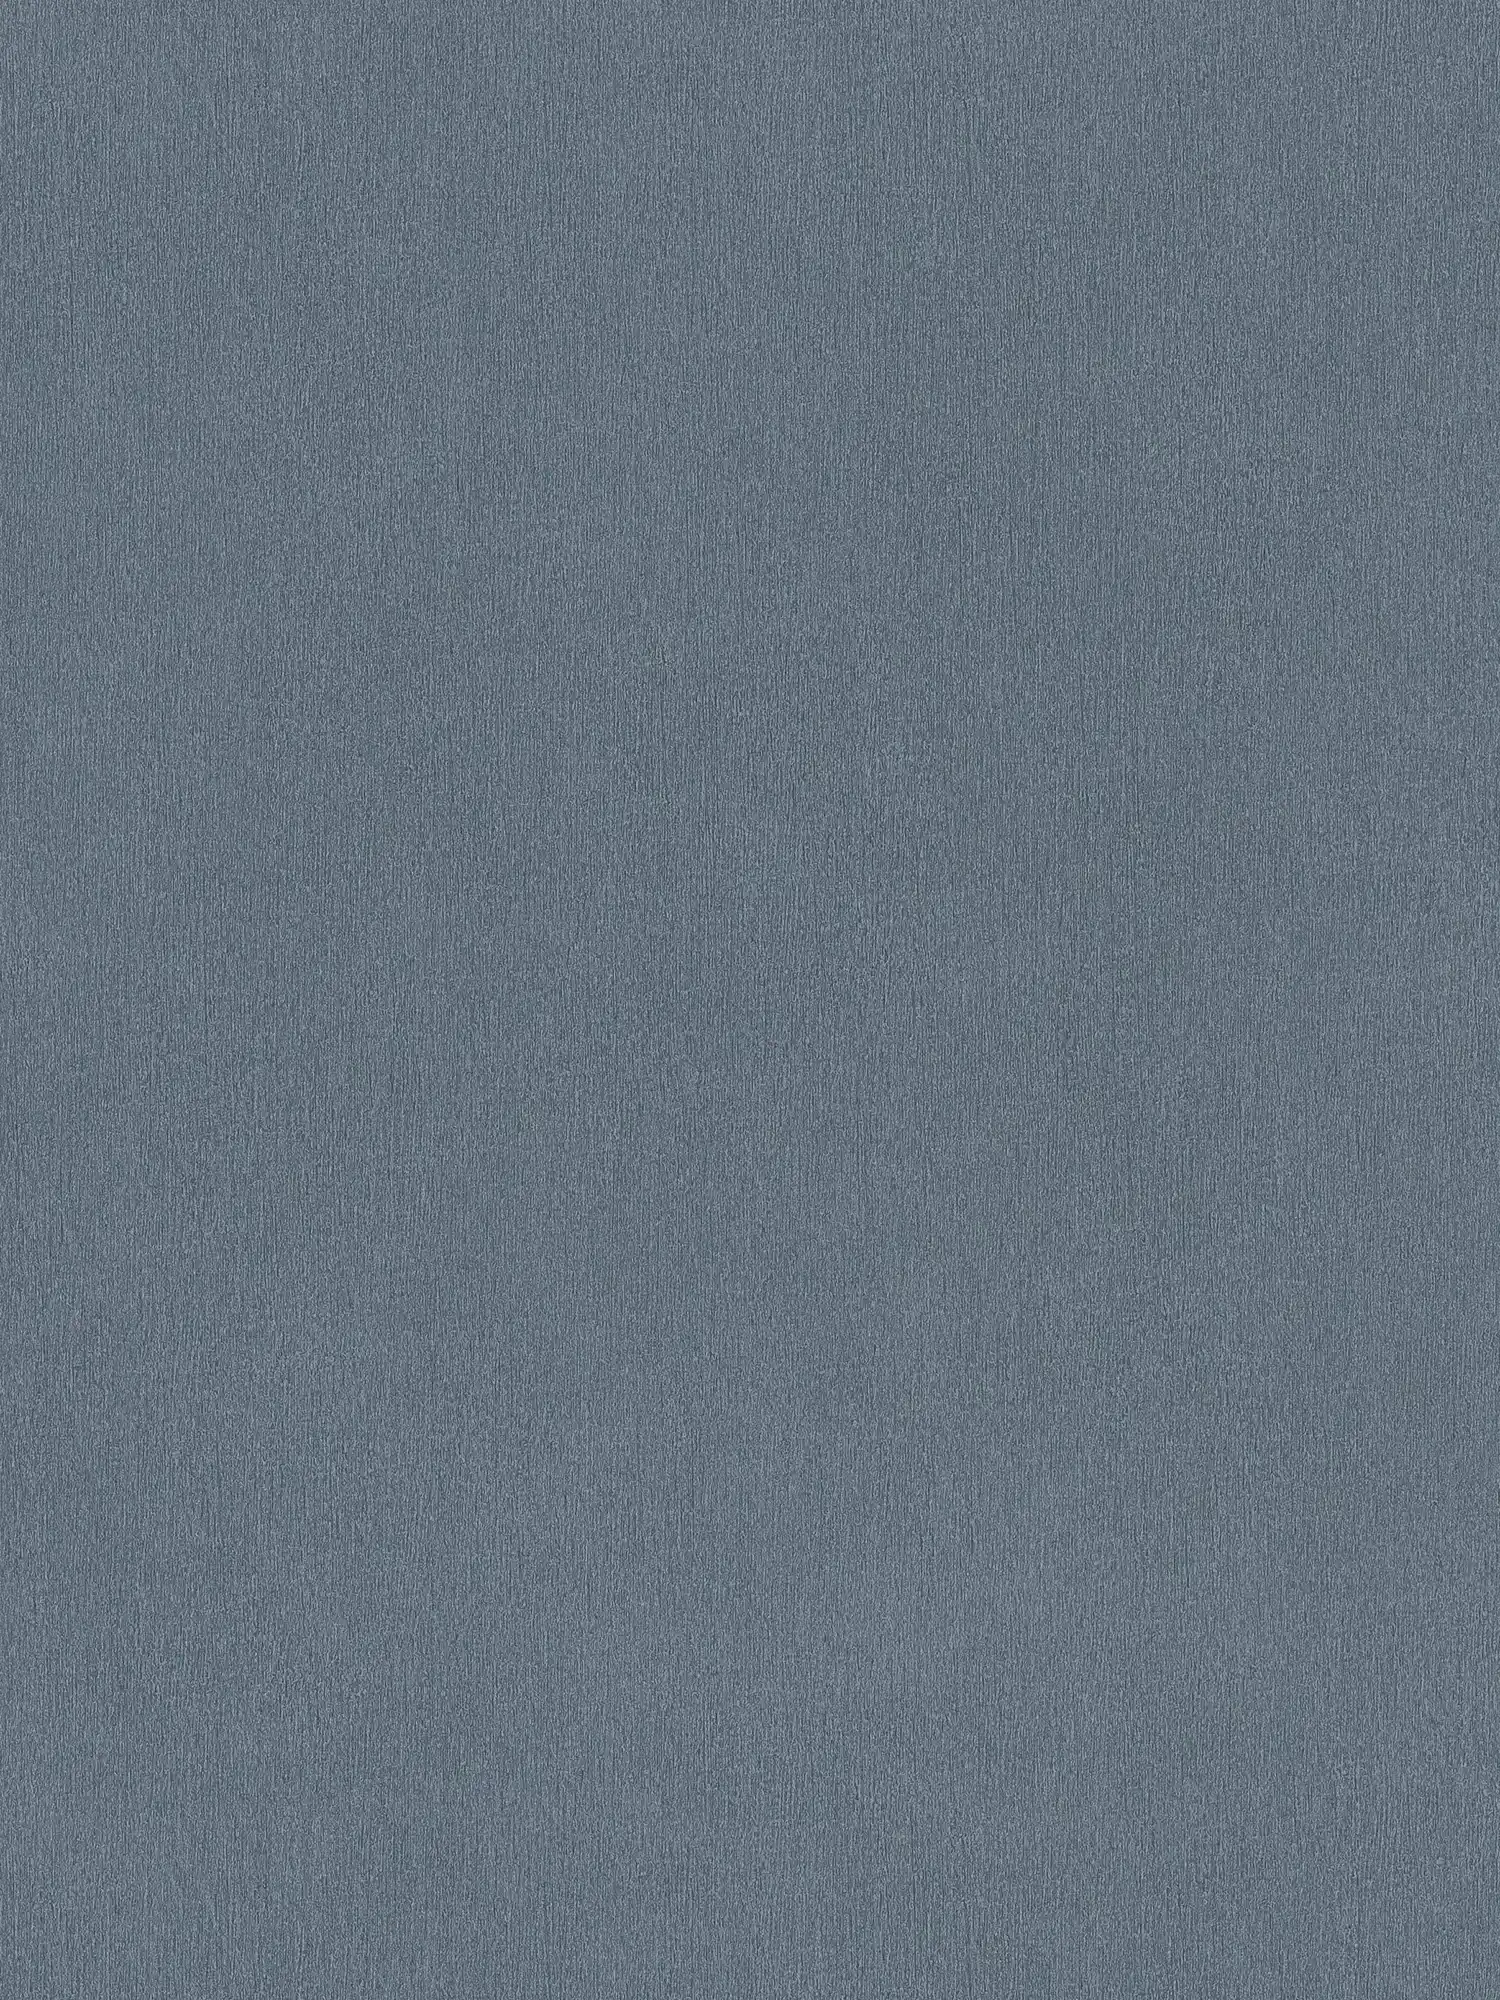 Dark grey wallpaper non-woven, monochrome with colour hatching
